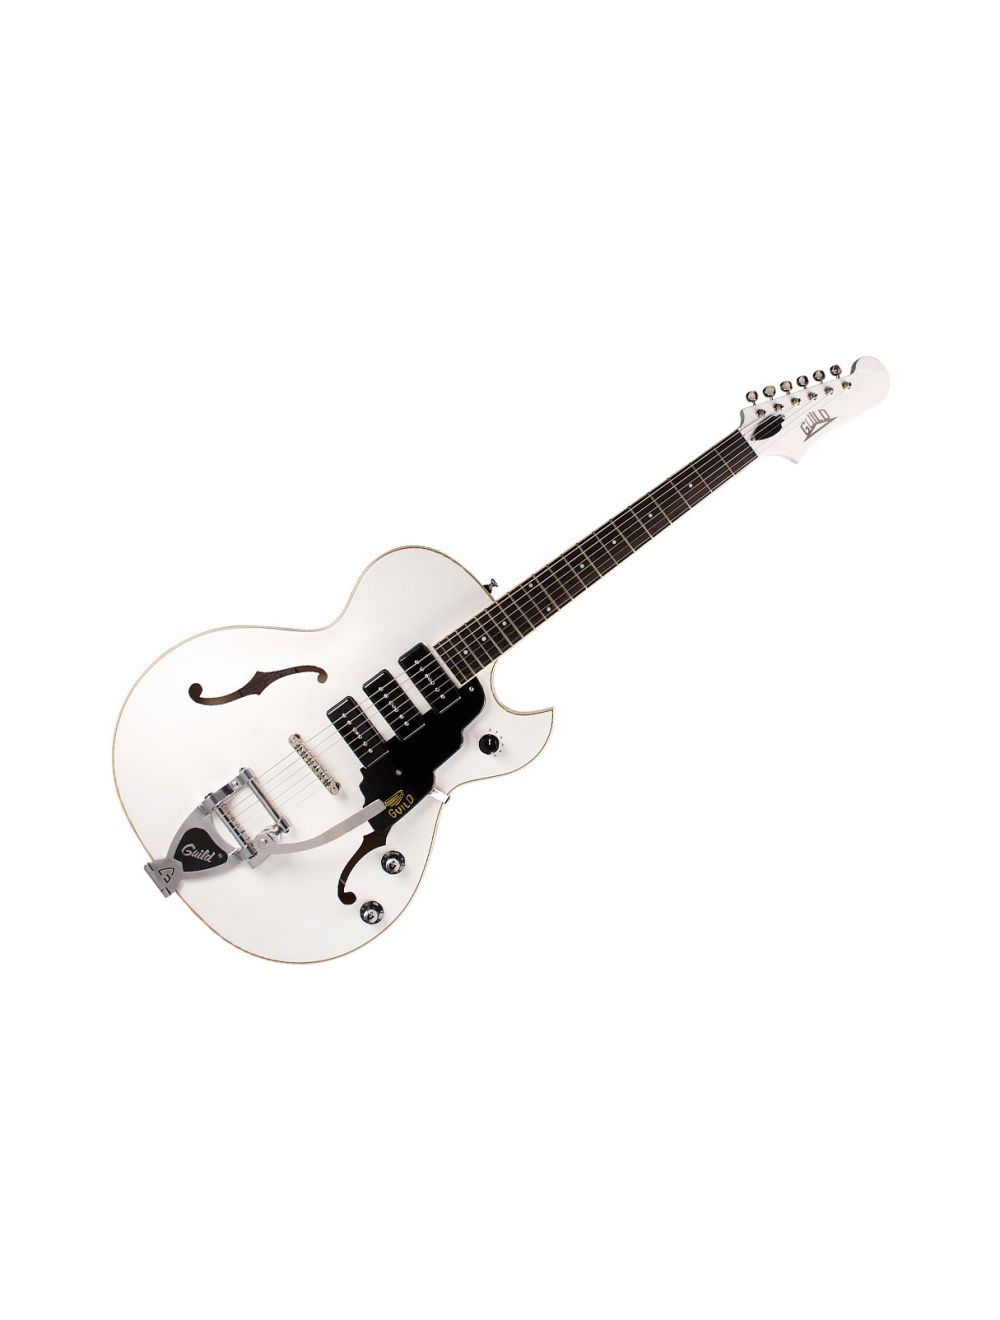 Guild Starfire I Jet 90 Electric Guitar - Satin White $419.99